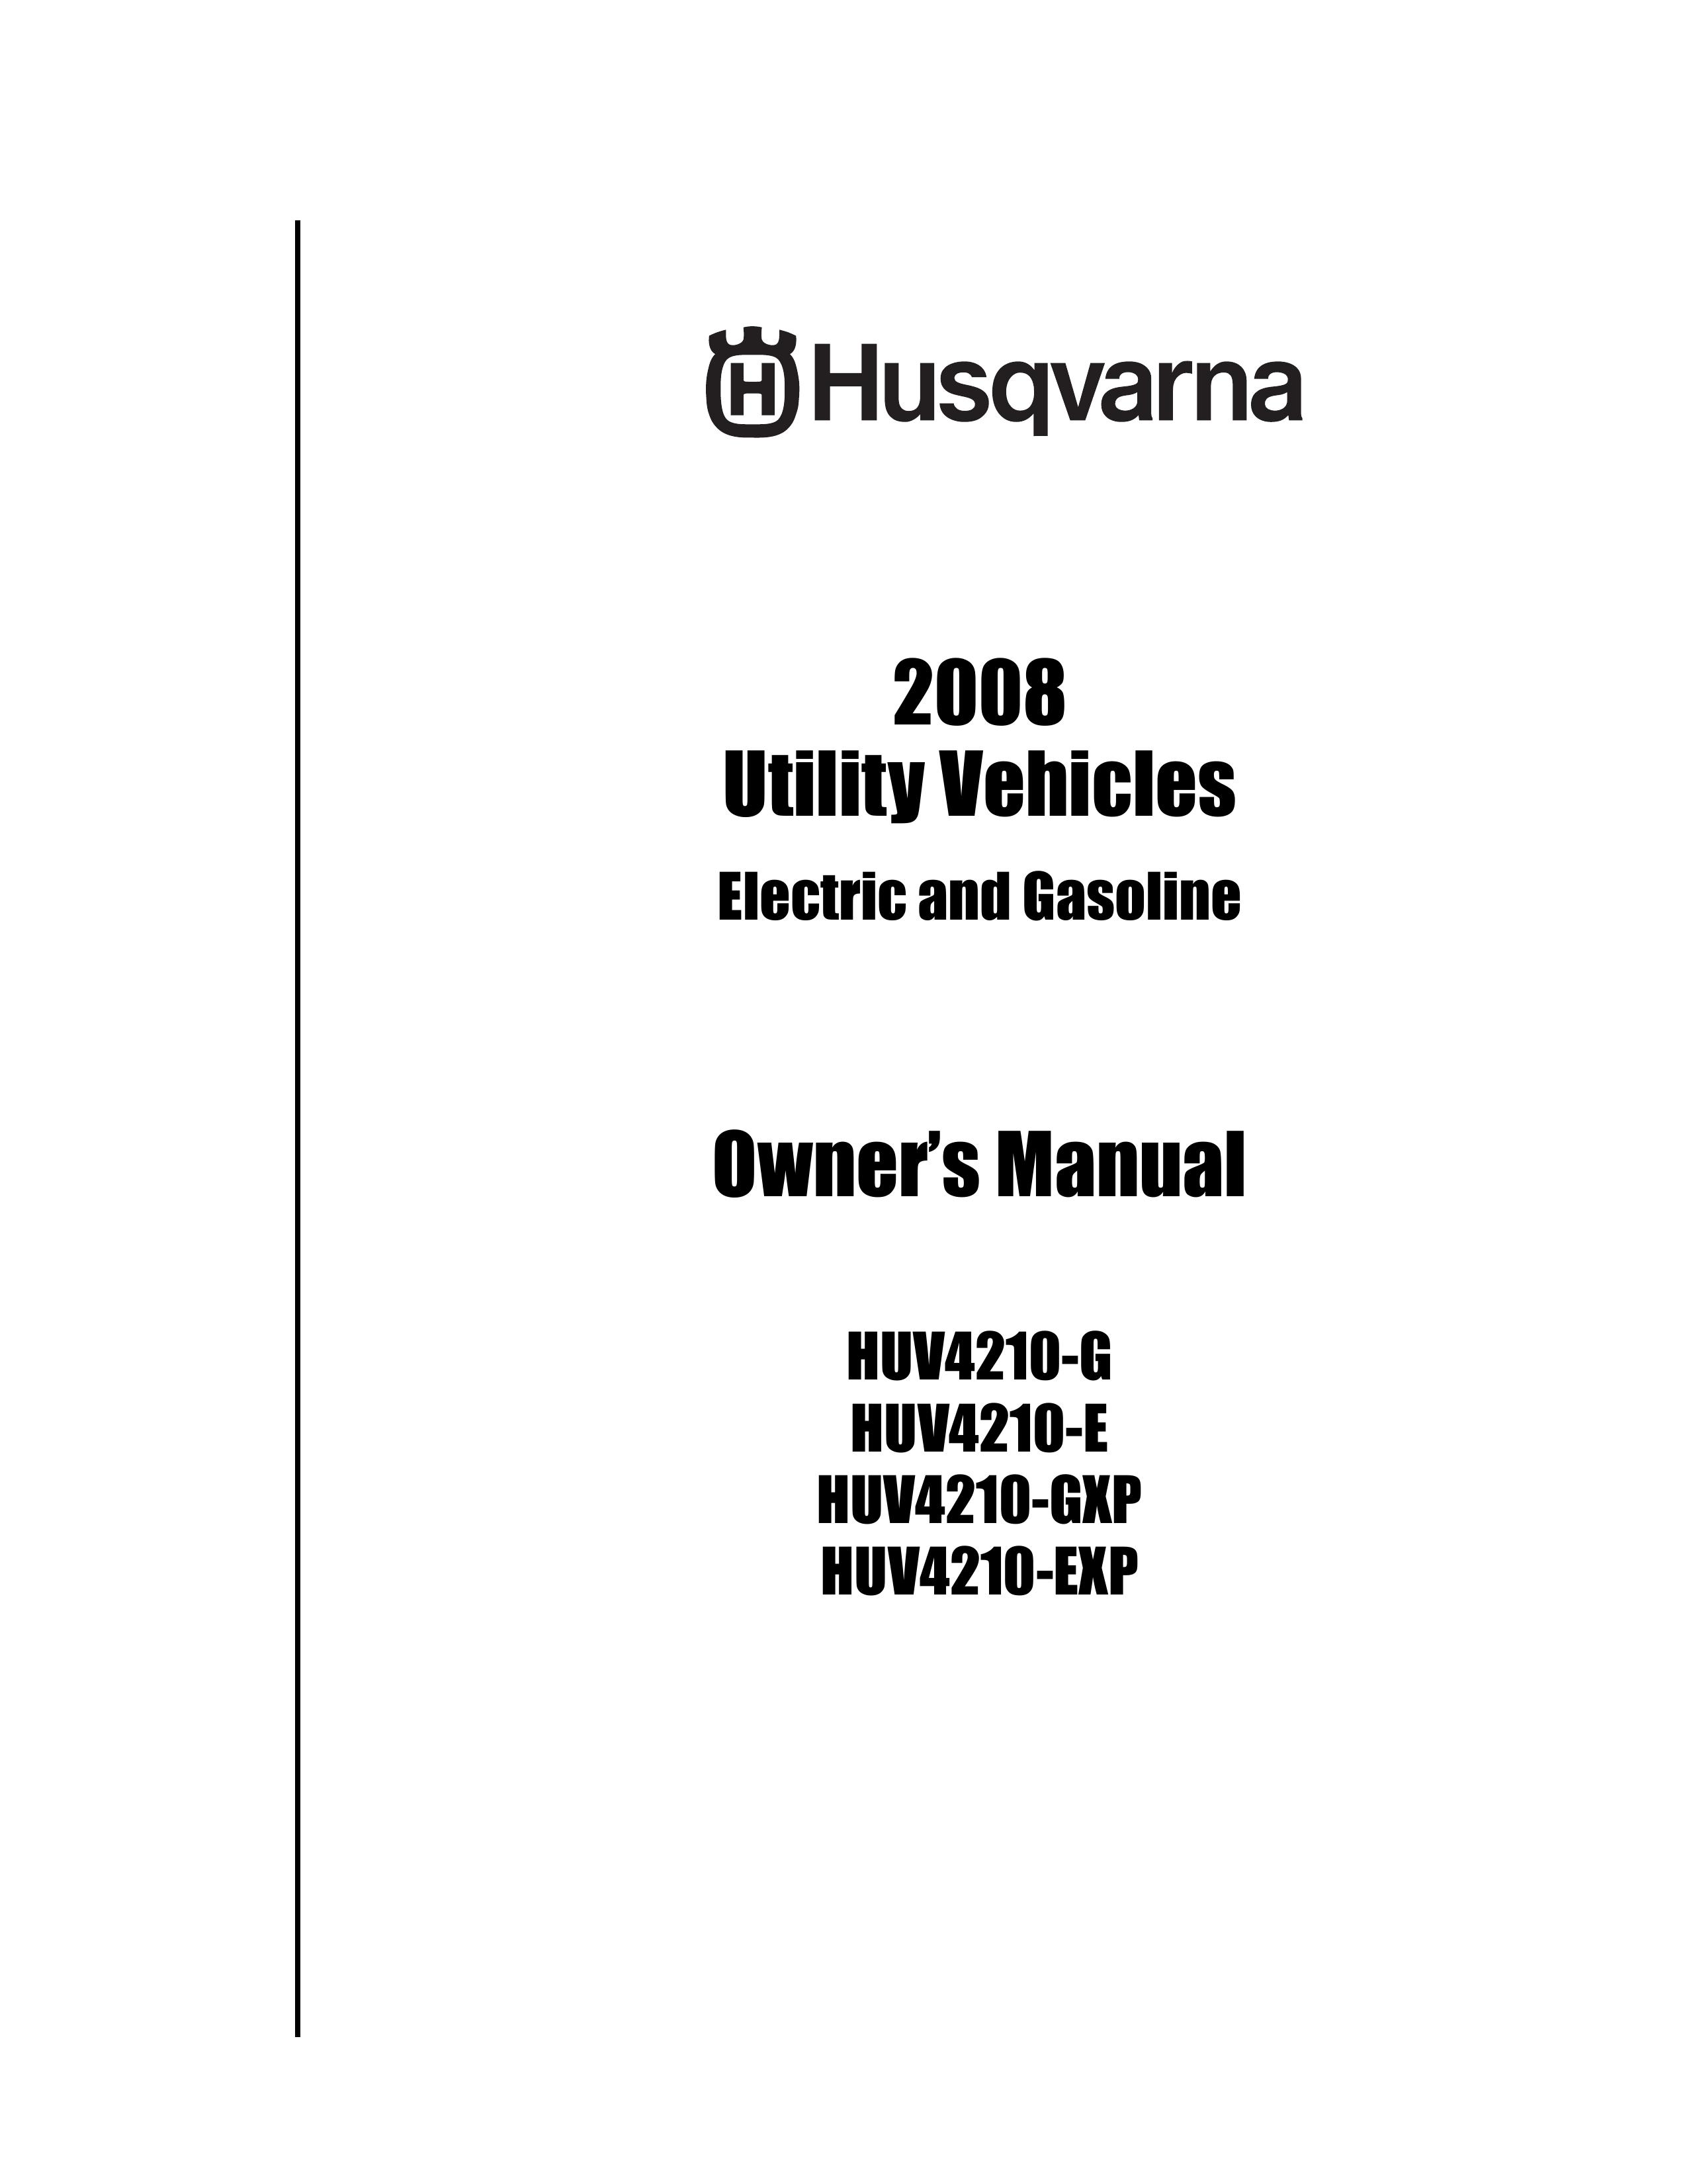 Husqvarna HUV4210-G Utility Vehicle User Manual